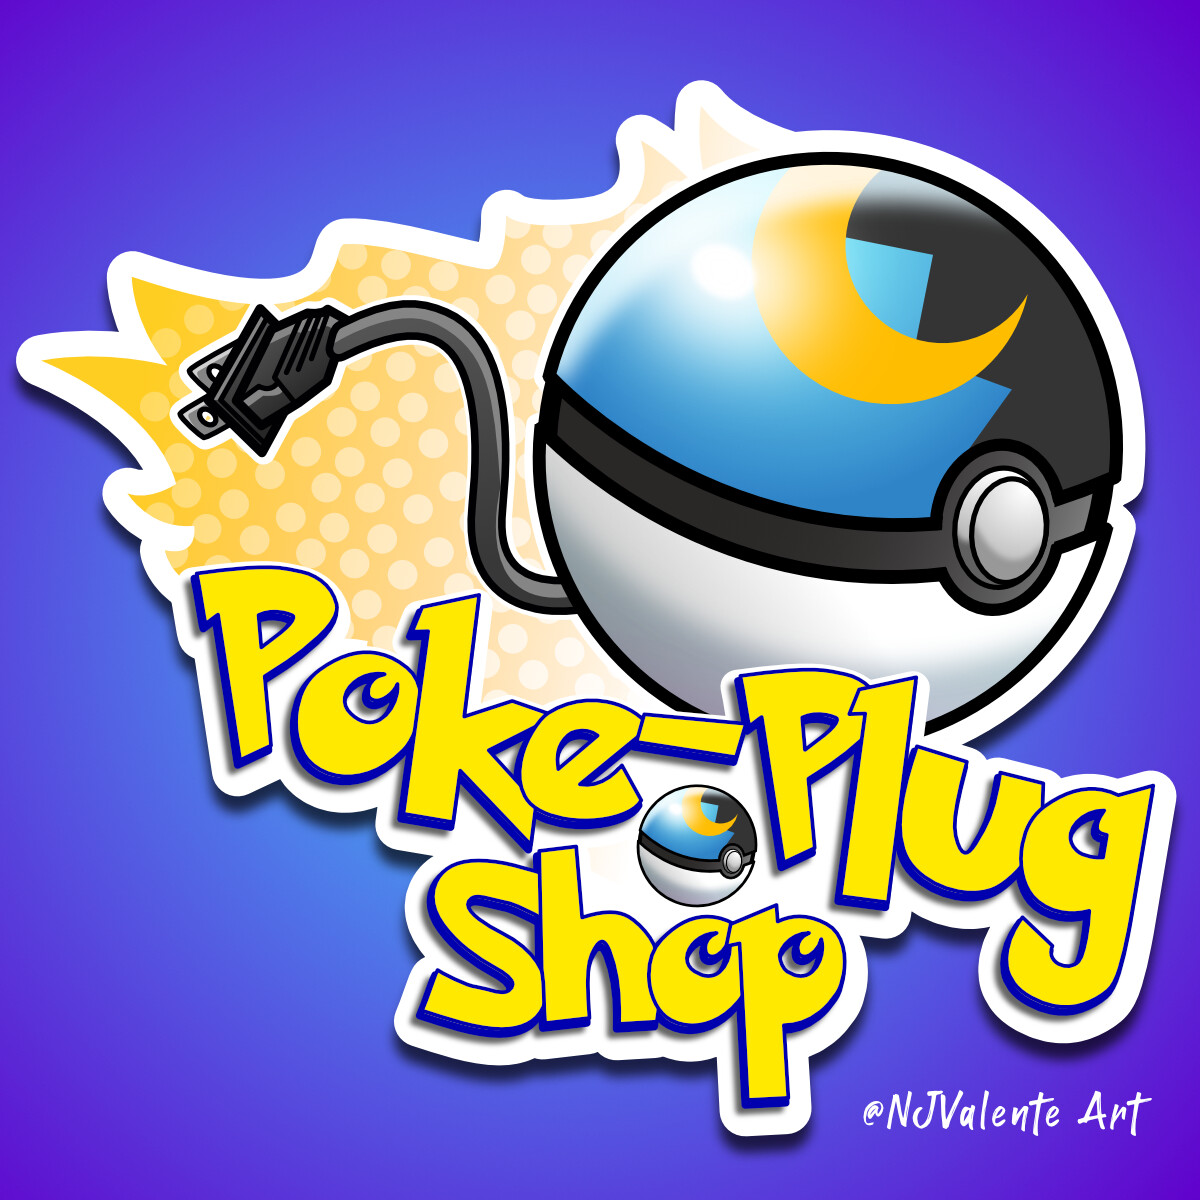 Poke-Plug Shop Logo Design